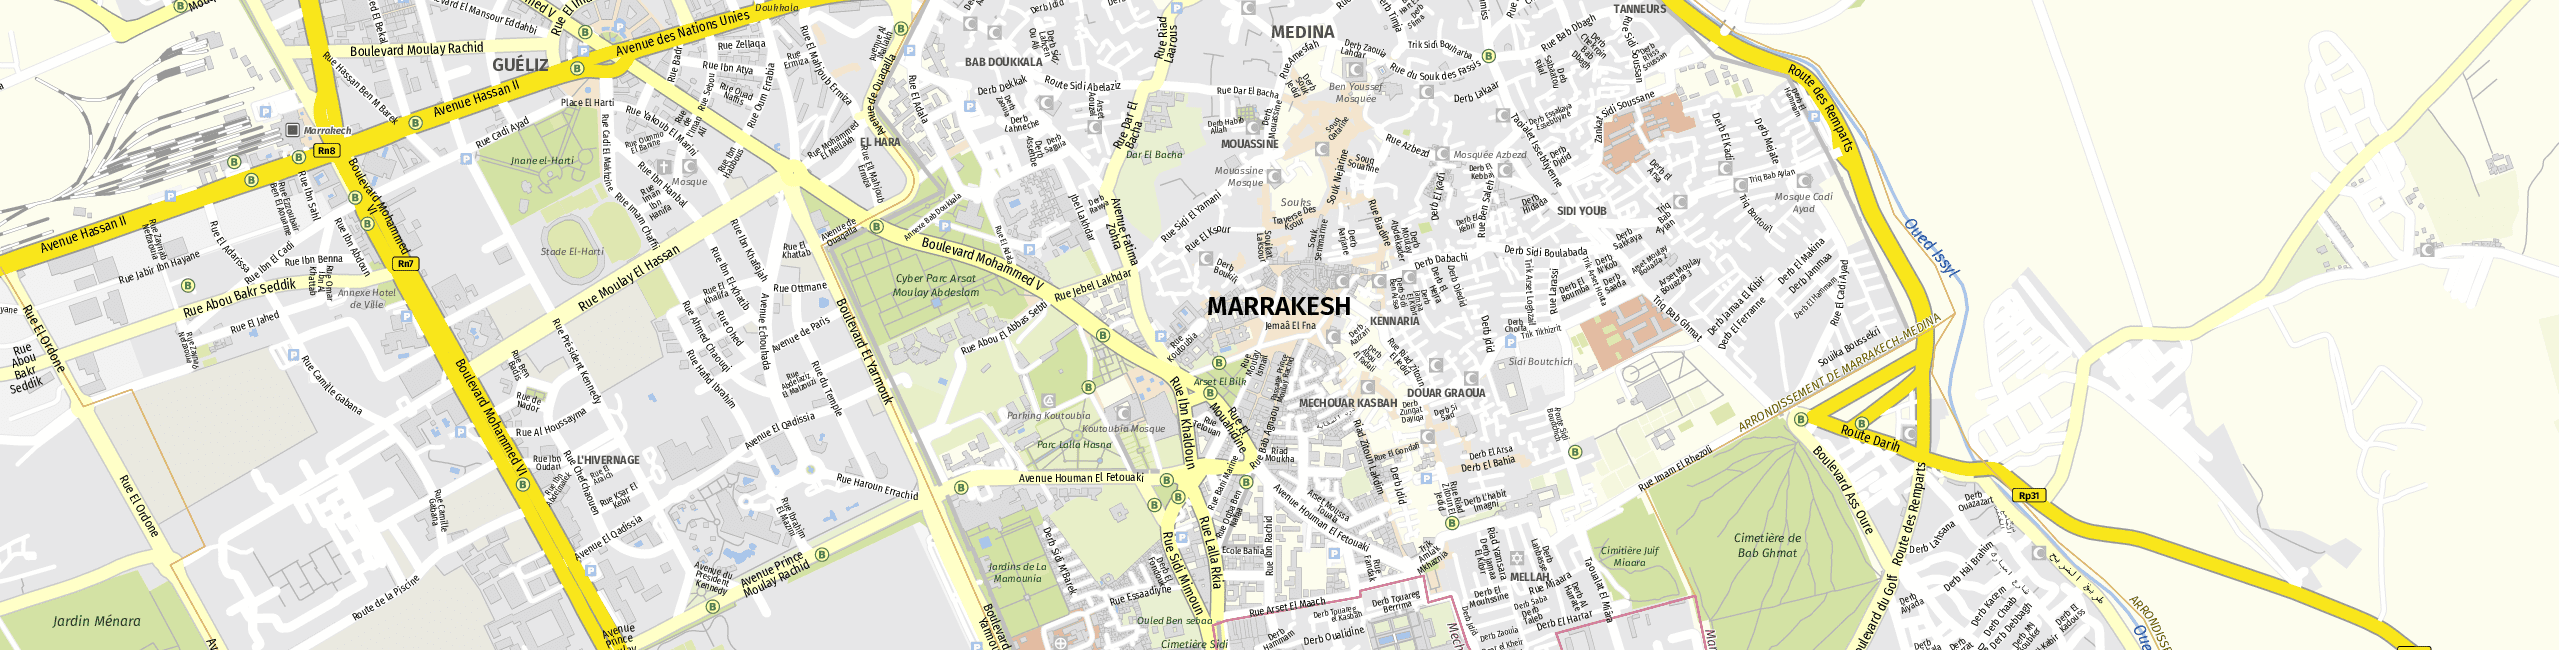 Stadtplan Marrakech zum Downloaden.